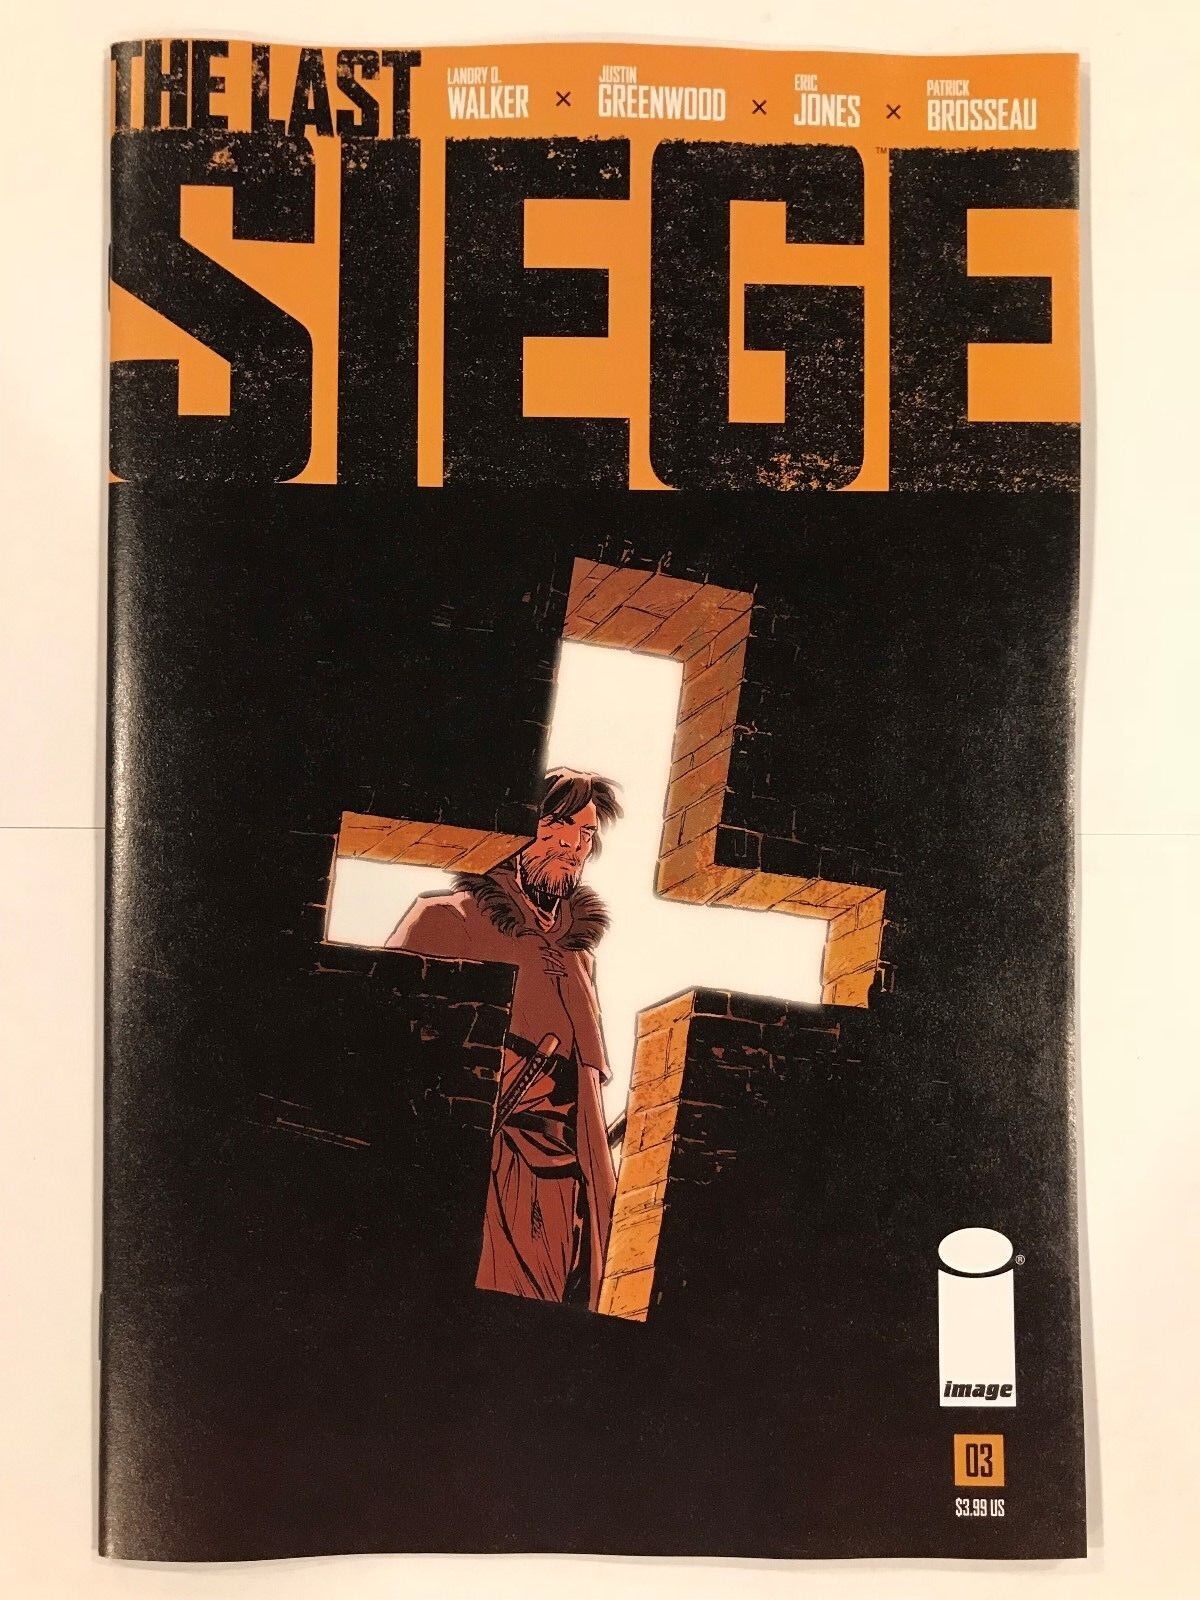 The Last Seige #3 Image Comic 1st Print 2018 unread NM